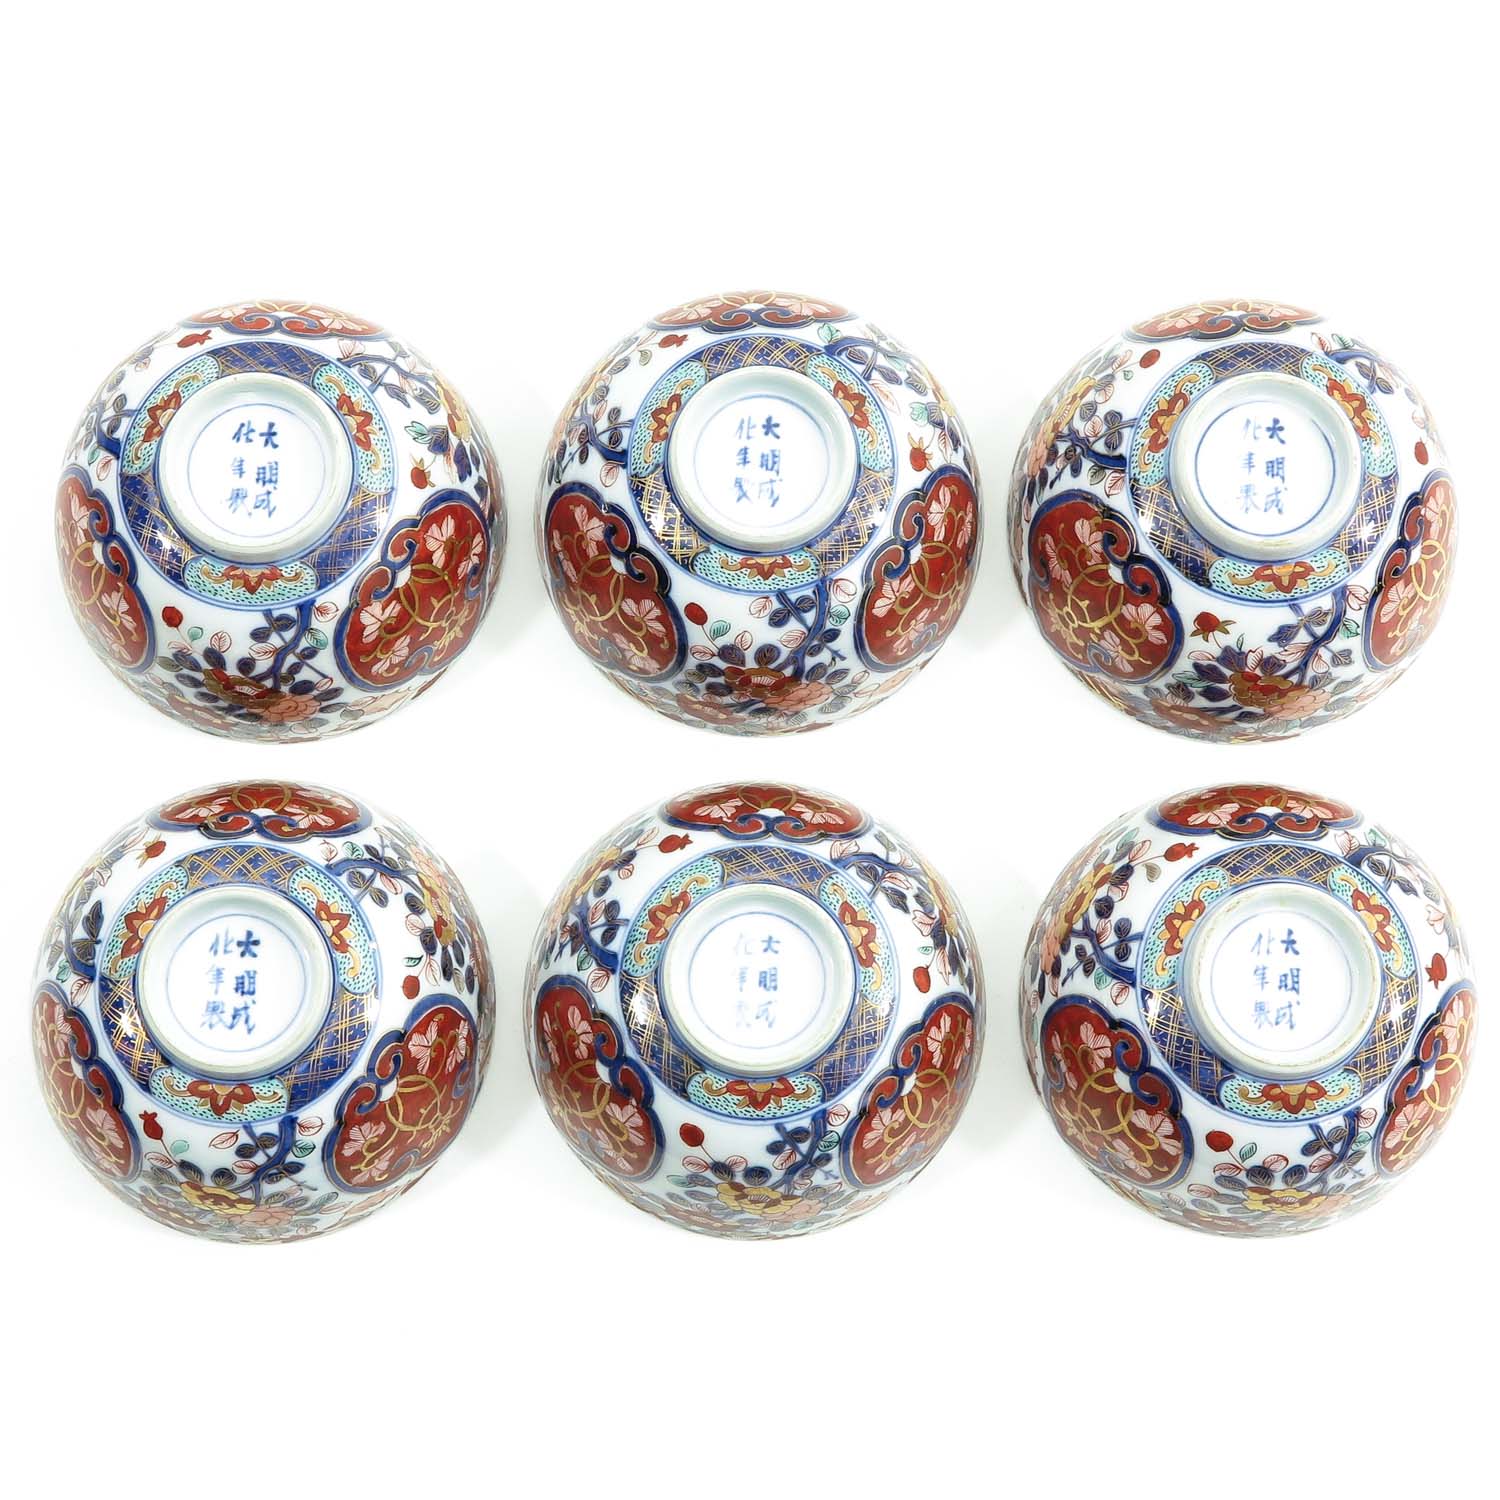 A Series of 6 Imari Bowls - Image 6 of 9